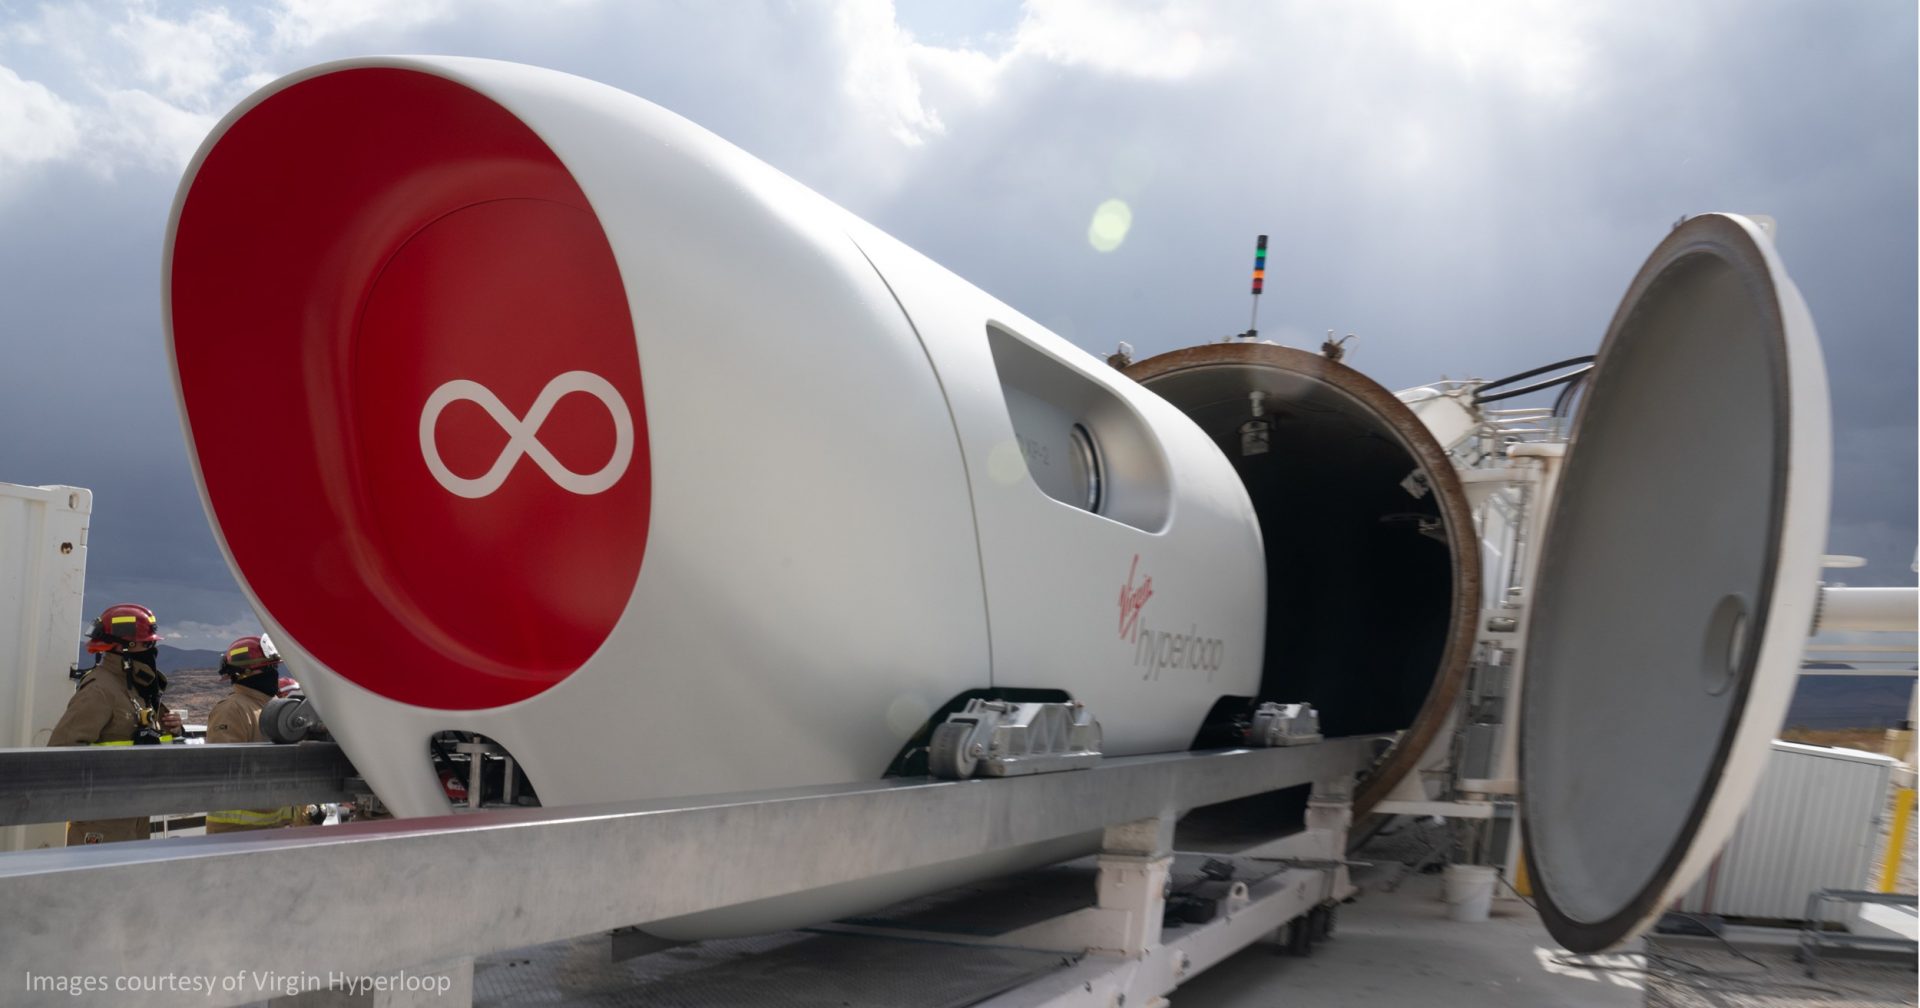 First Passengers Travel Safely on Hyperloop – Virgin’s new transport system